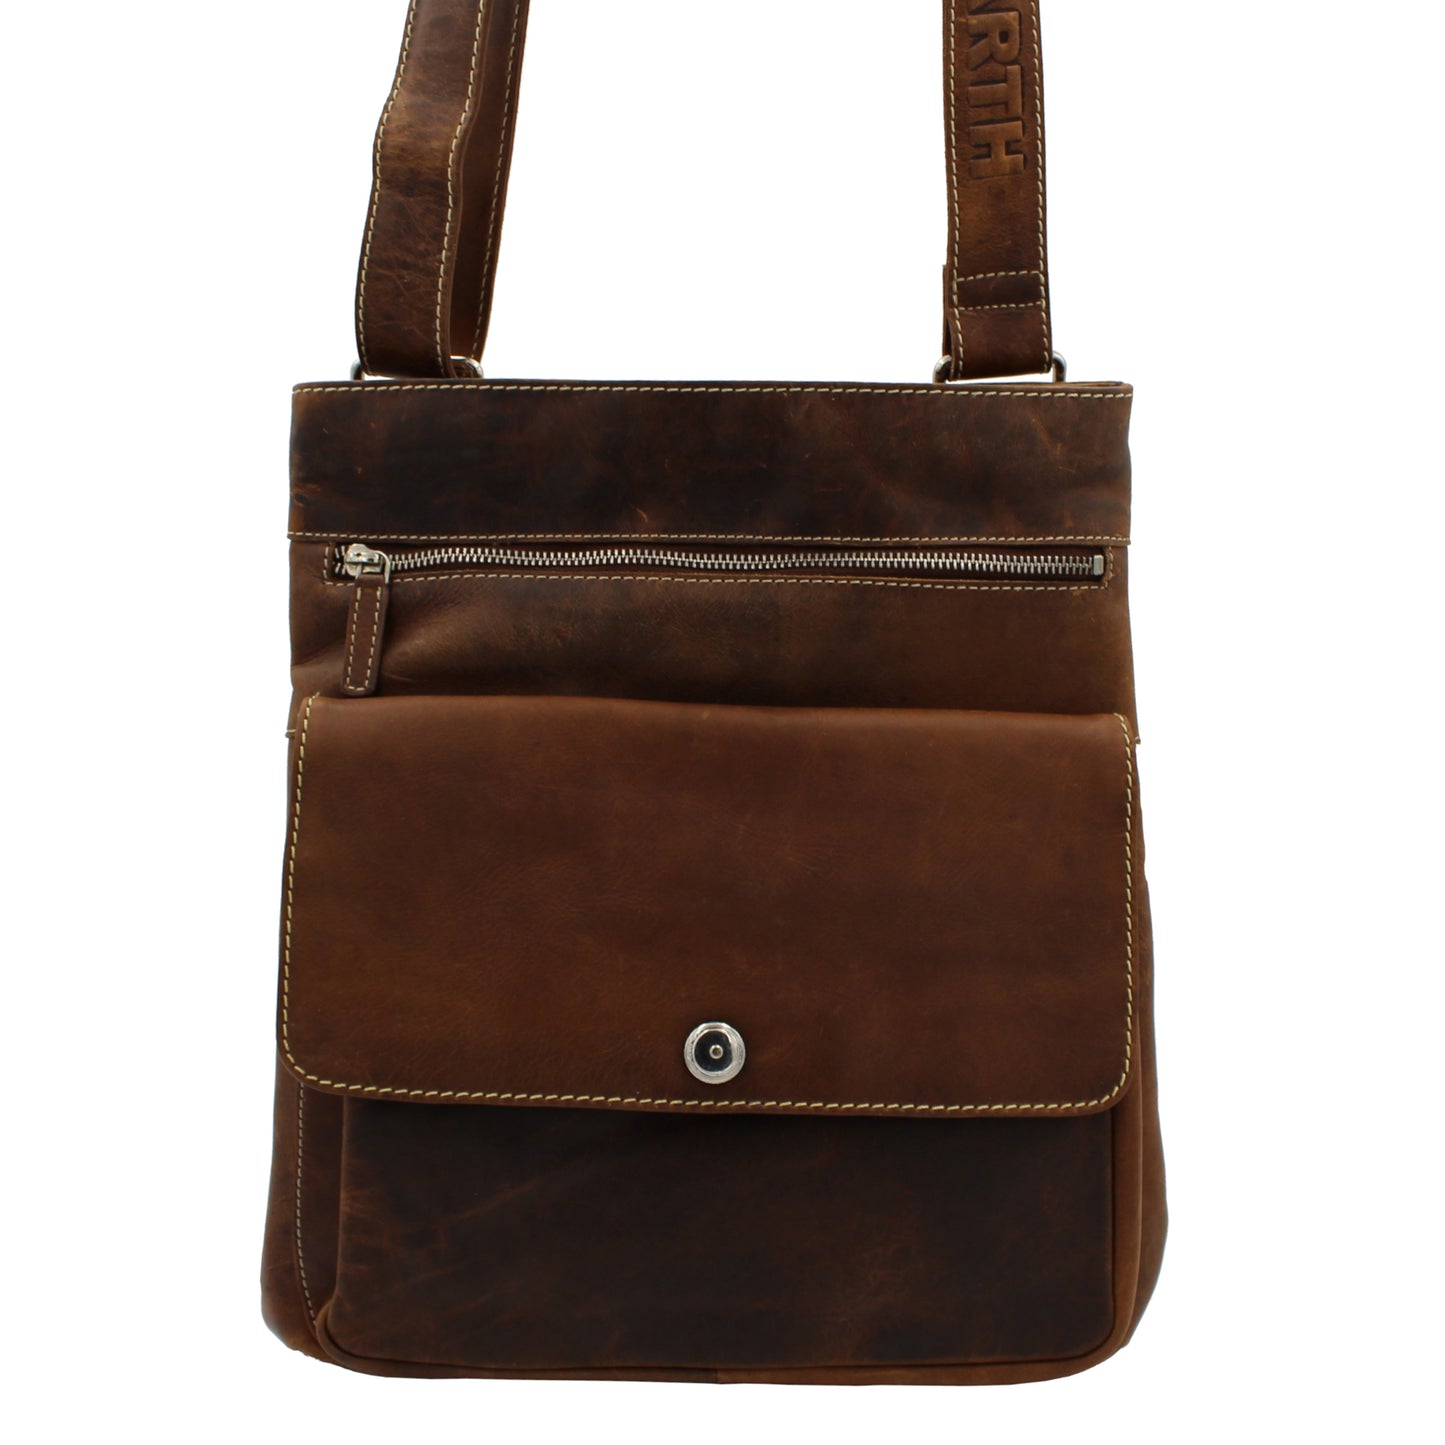 RE Leather Handbag (12"x13"x1.5")